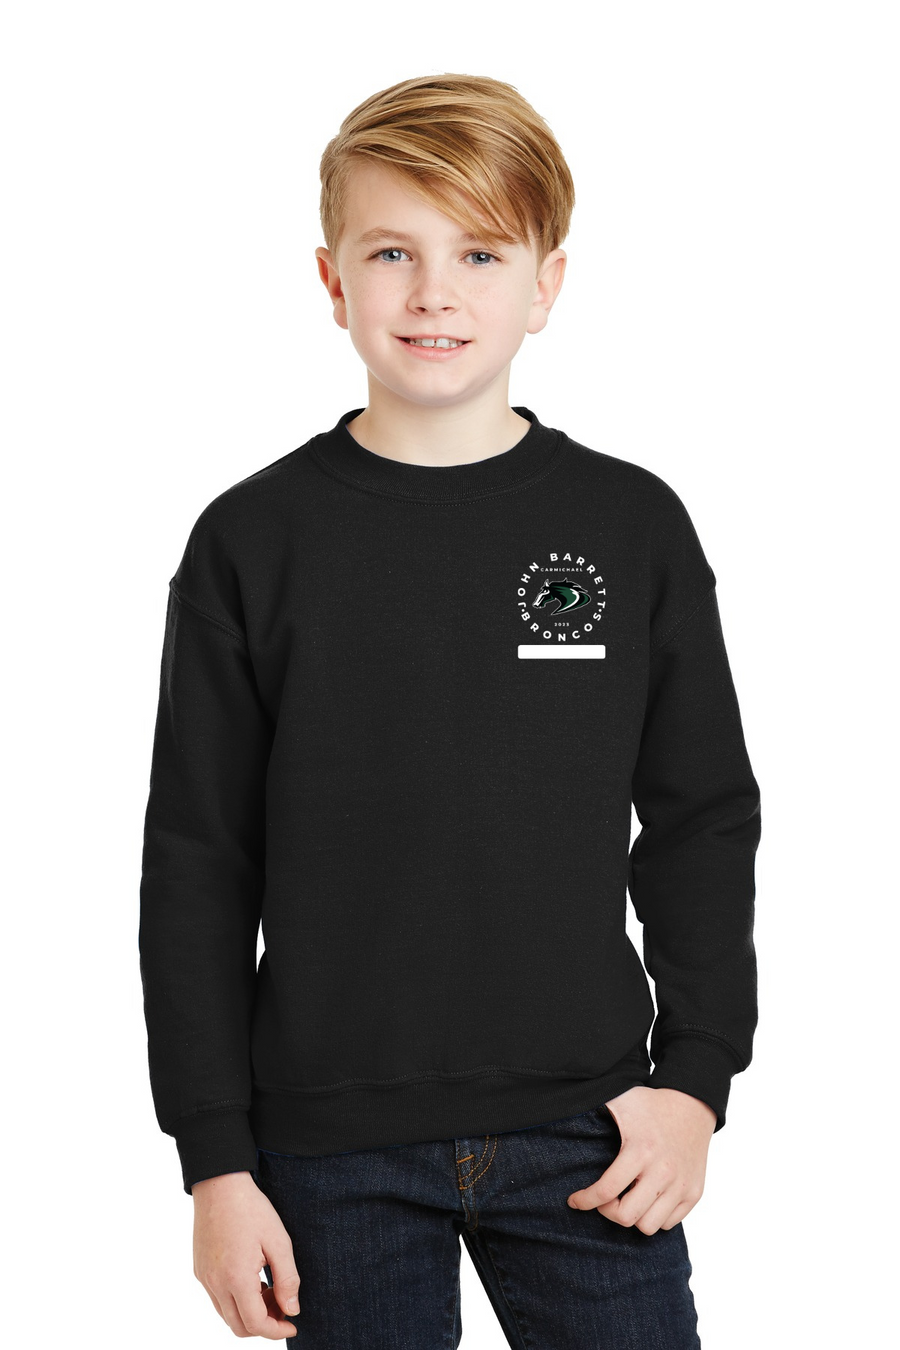 John Barrett Middle School PE Store On-Demand-Unisex Crewneck Sweatshirt